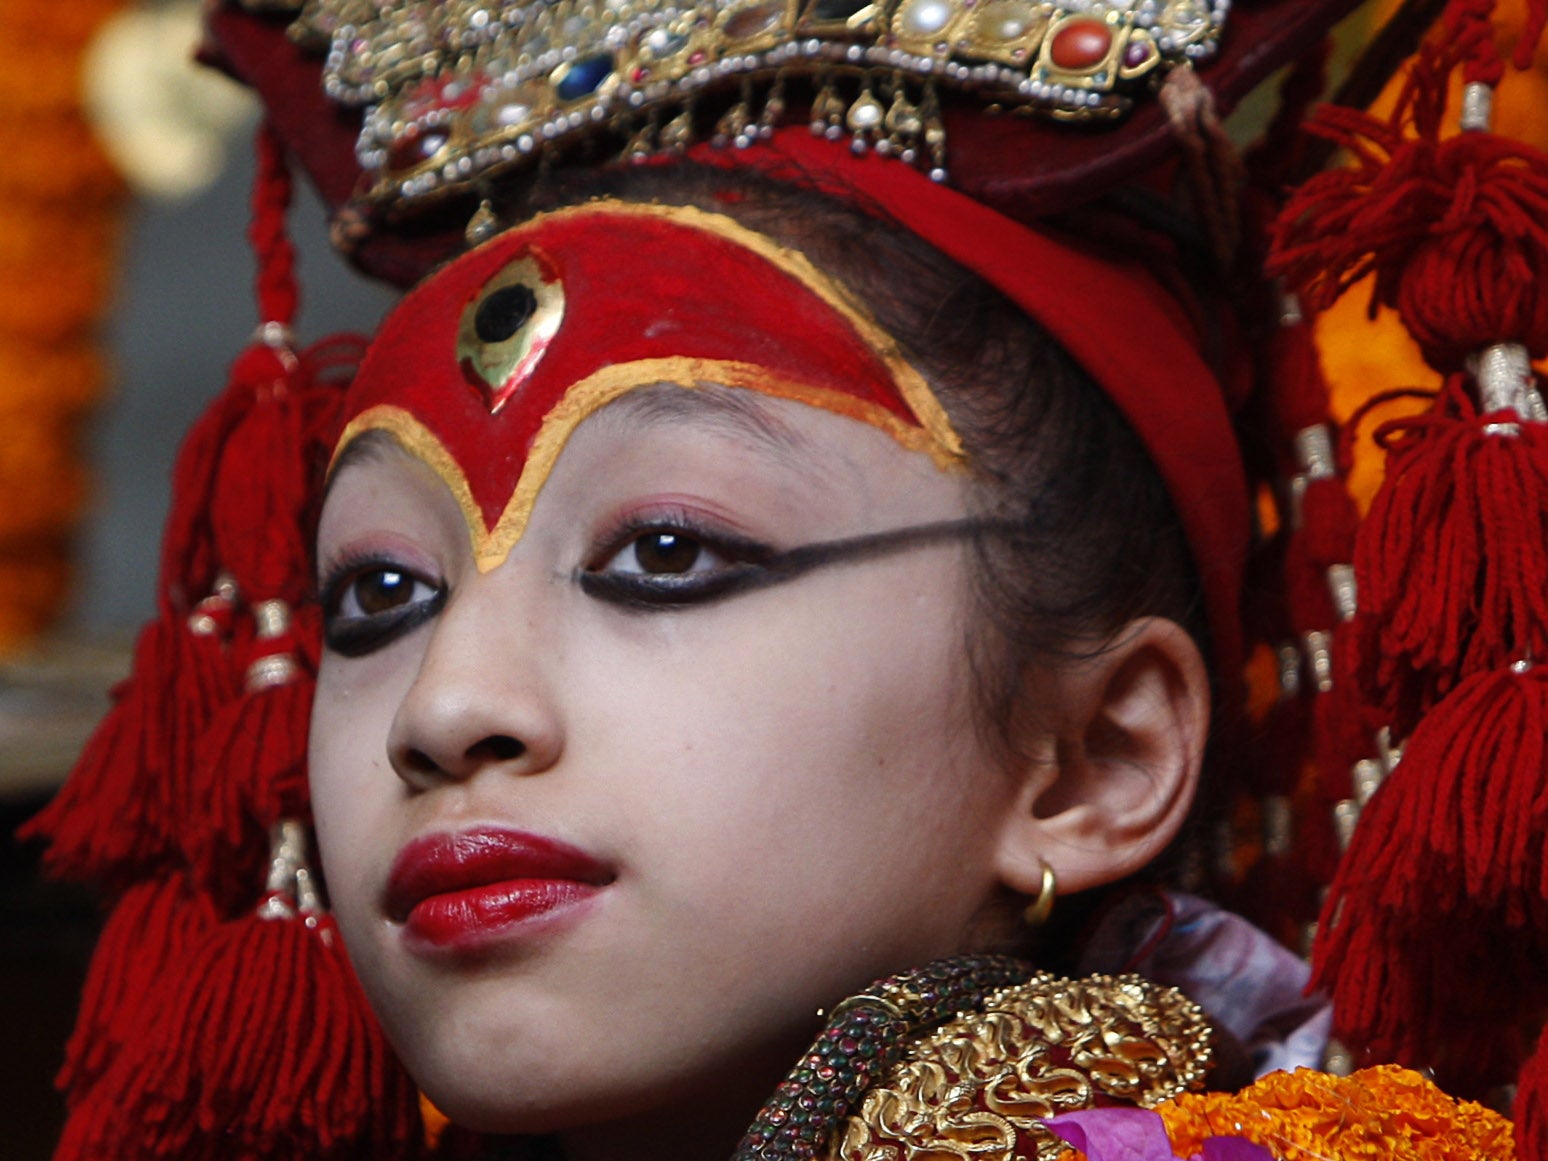 Matina Shakya has rejoined Nepalese society after living as a Royal Kumari, or 'living goddess', since she was three years old